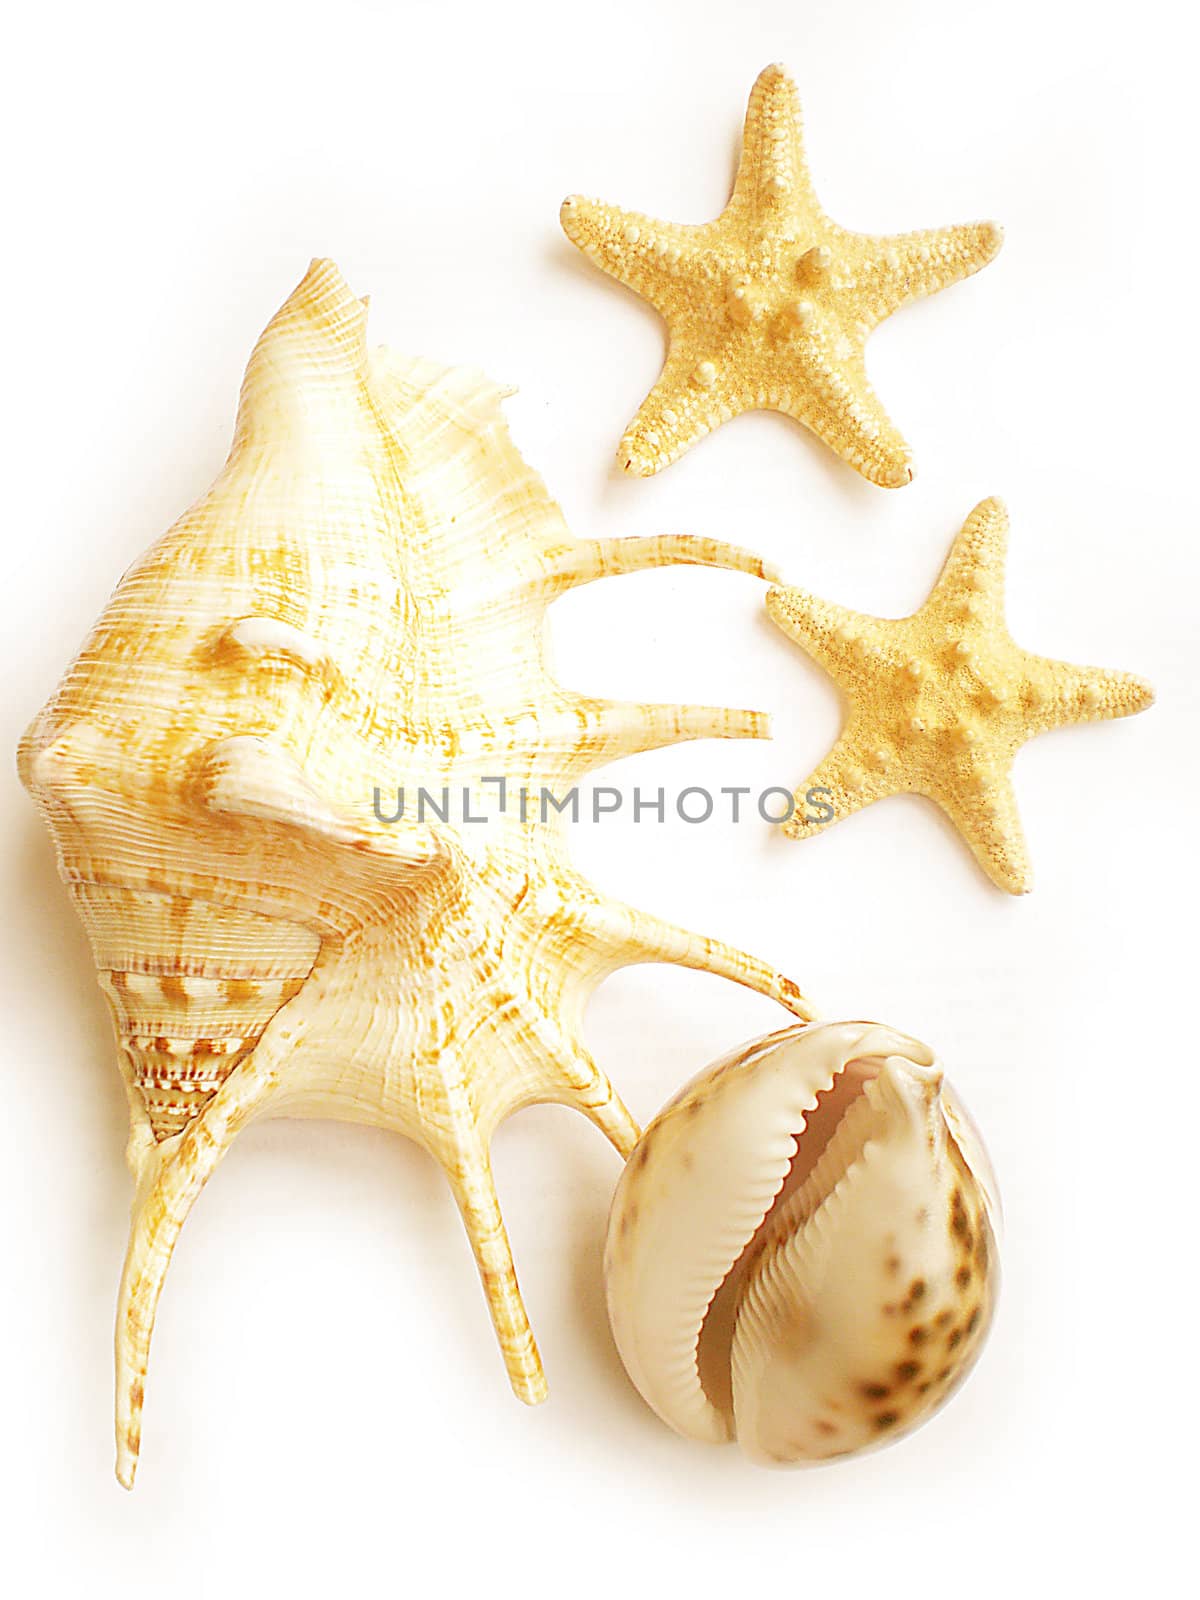 shells by Dessie_bg